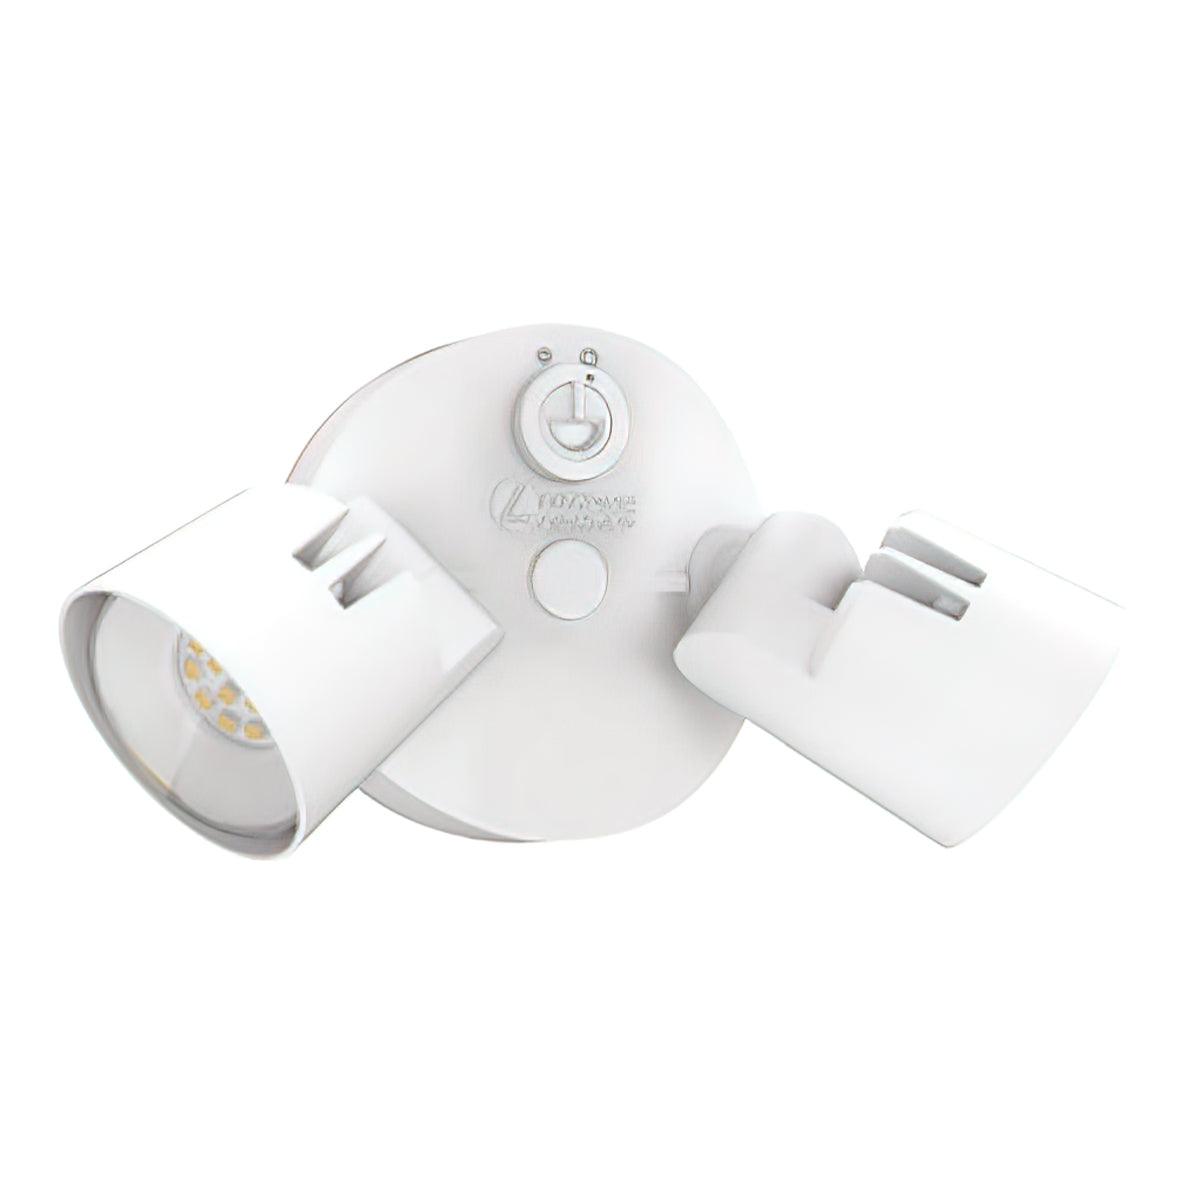 LED Security Flood Light With Photocell, 1700-2750 Lumens, 25 Watt, 4000K, Adjustable 2-Head, White Finish